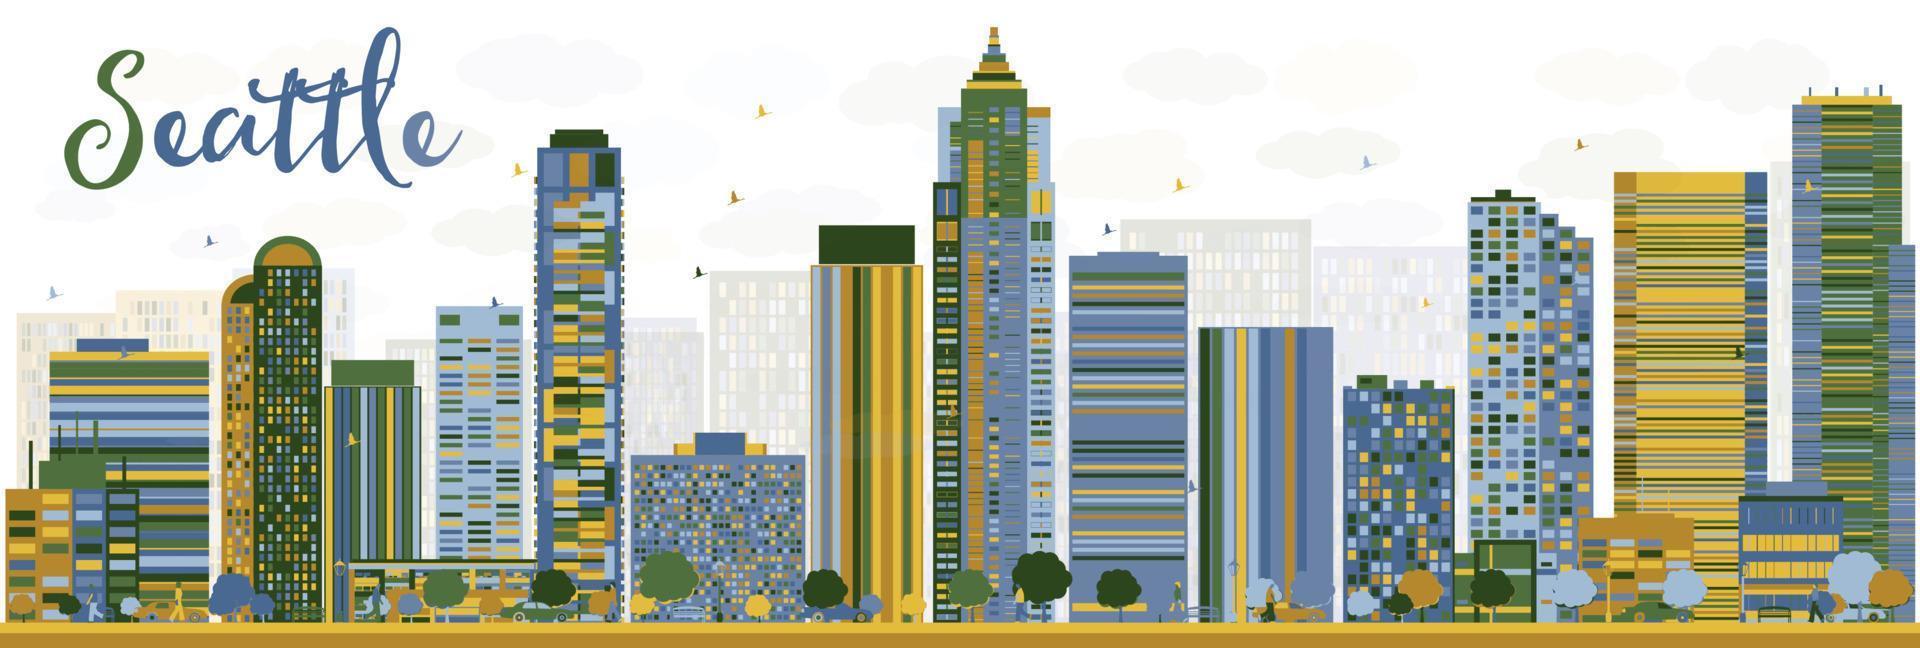 skyline abstrata da cidade de seattle com edifícios coloridos vetor